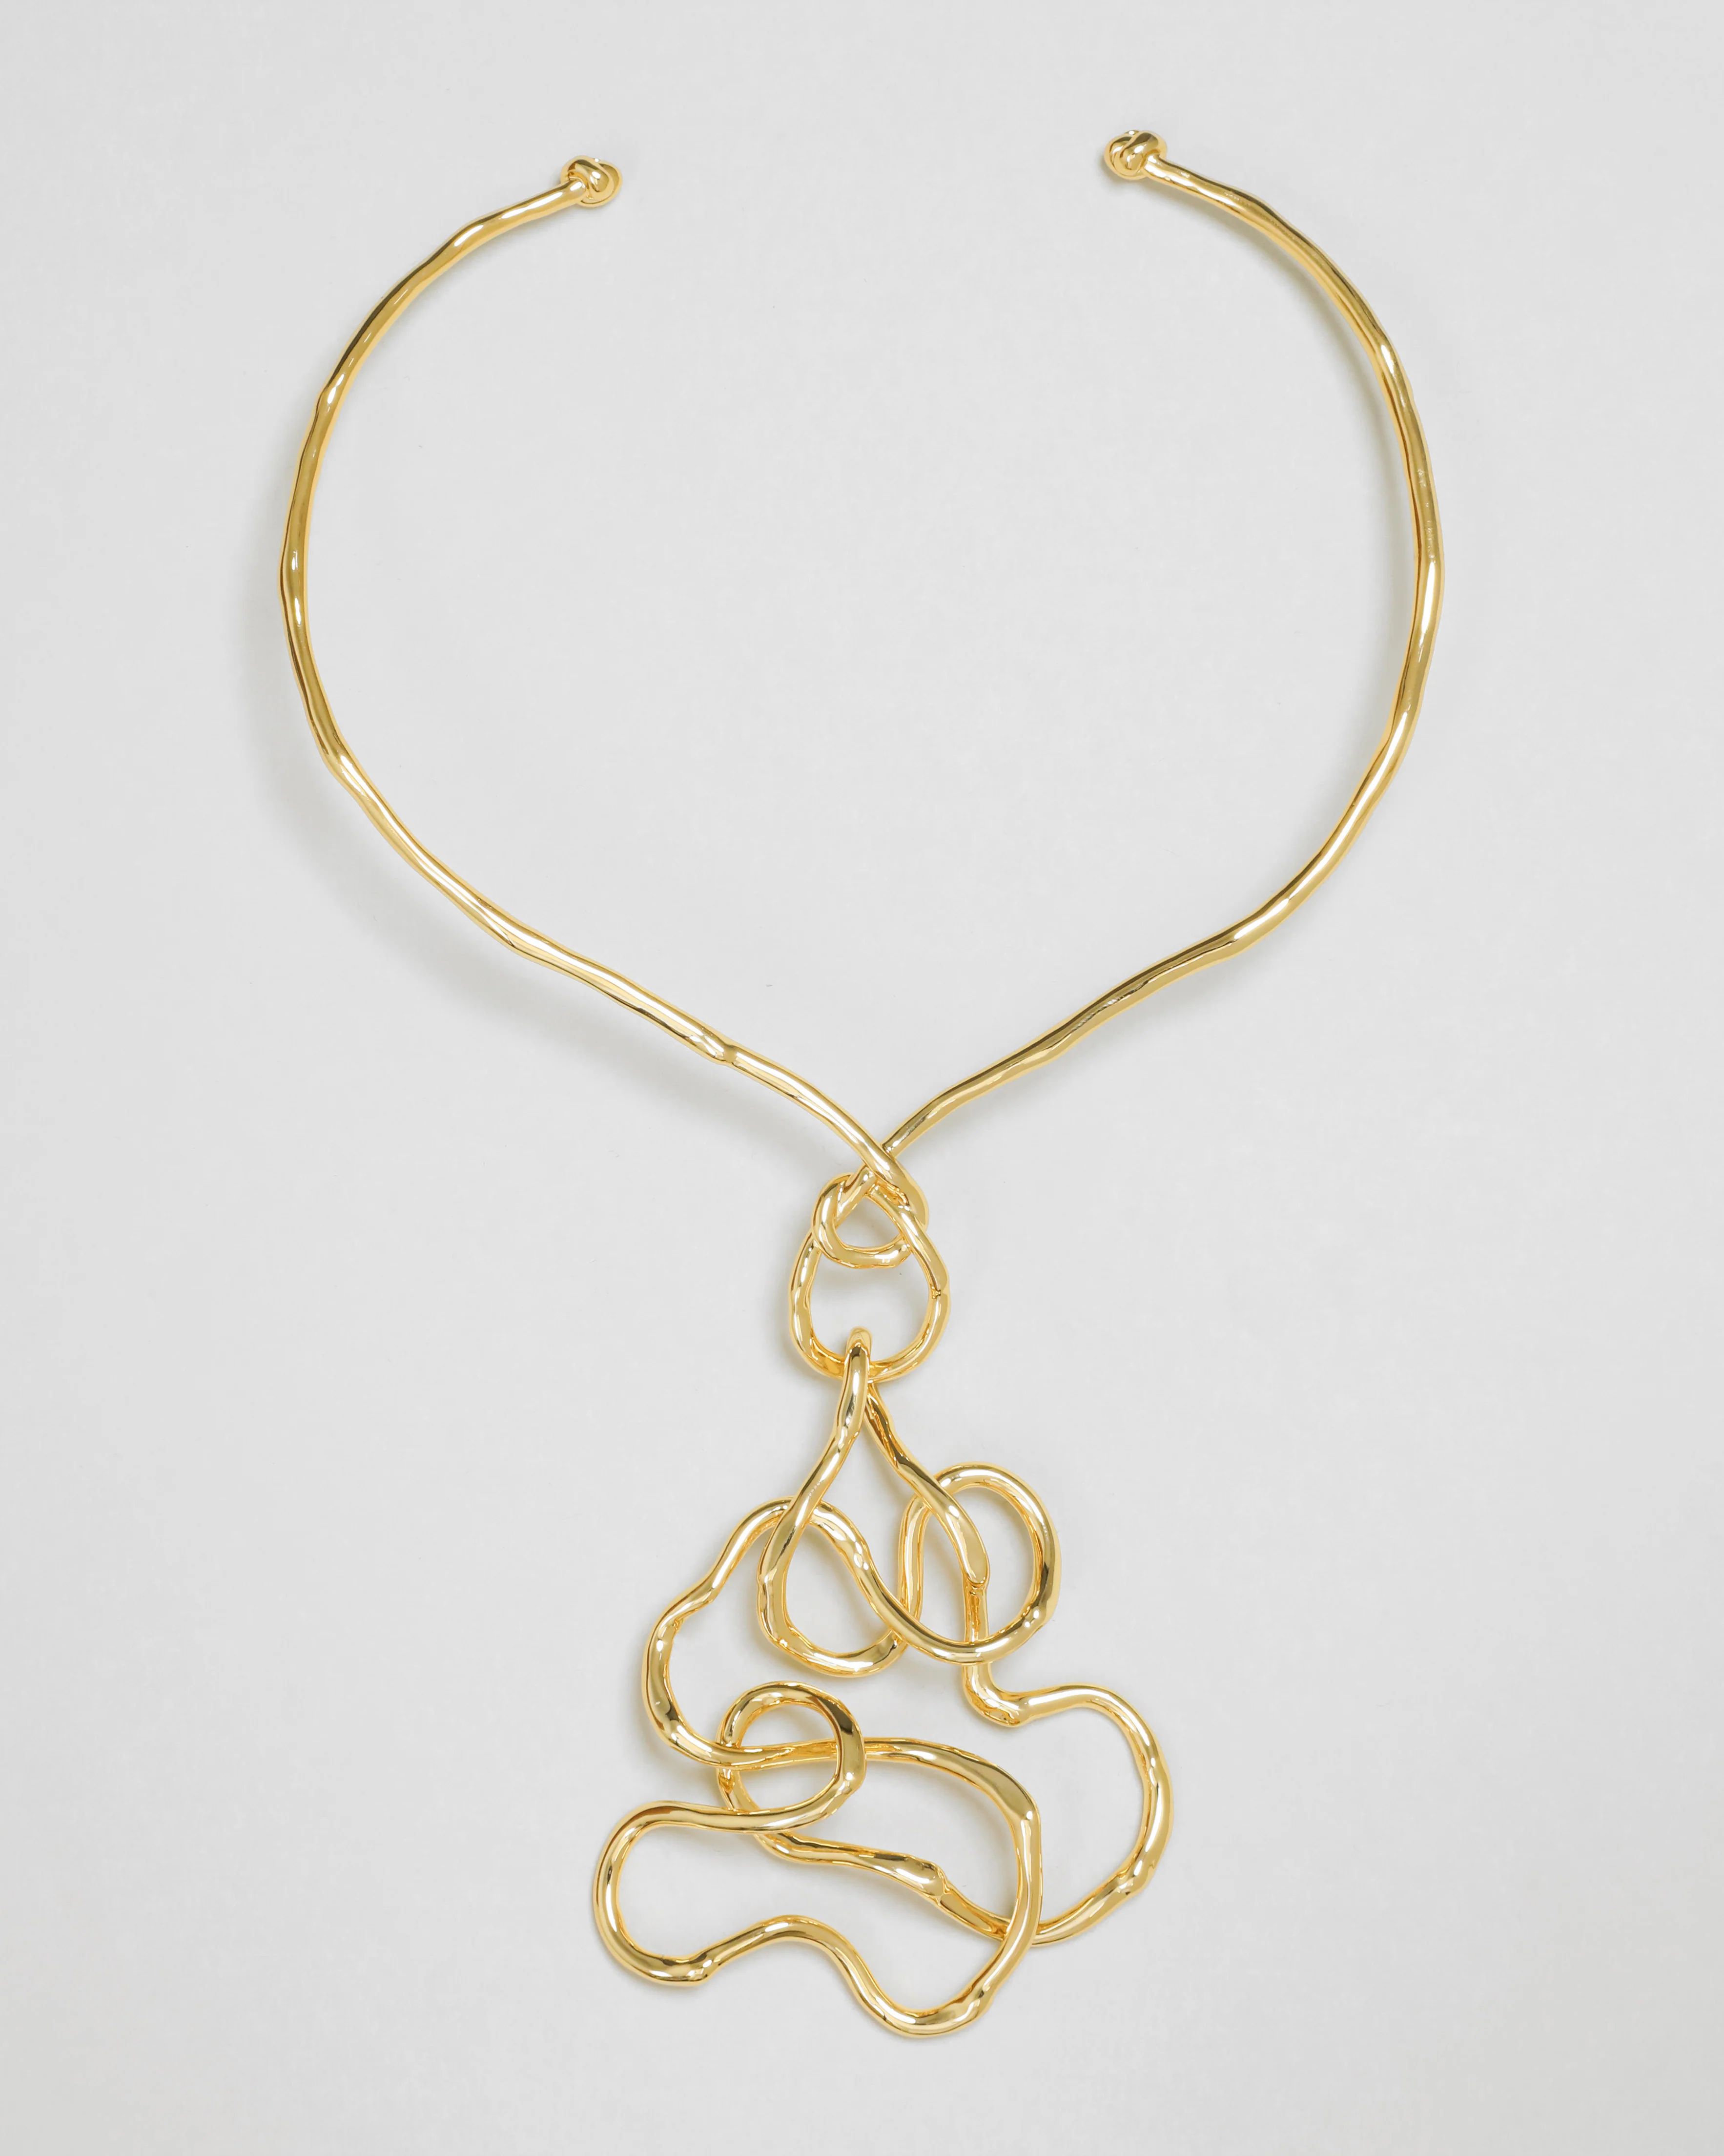 Twisted Gold Statement Collar Necklace | ALEXIS BITTAR | Alexis Bittar